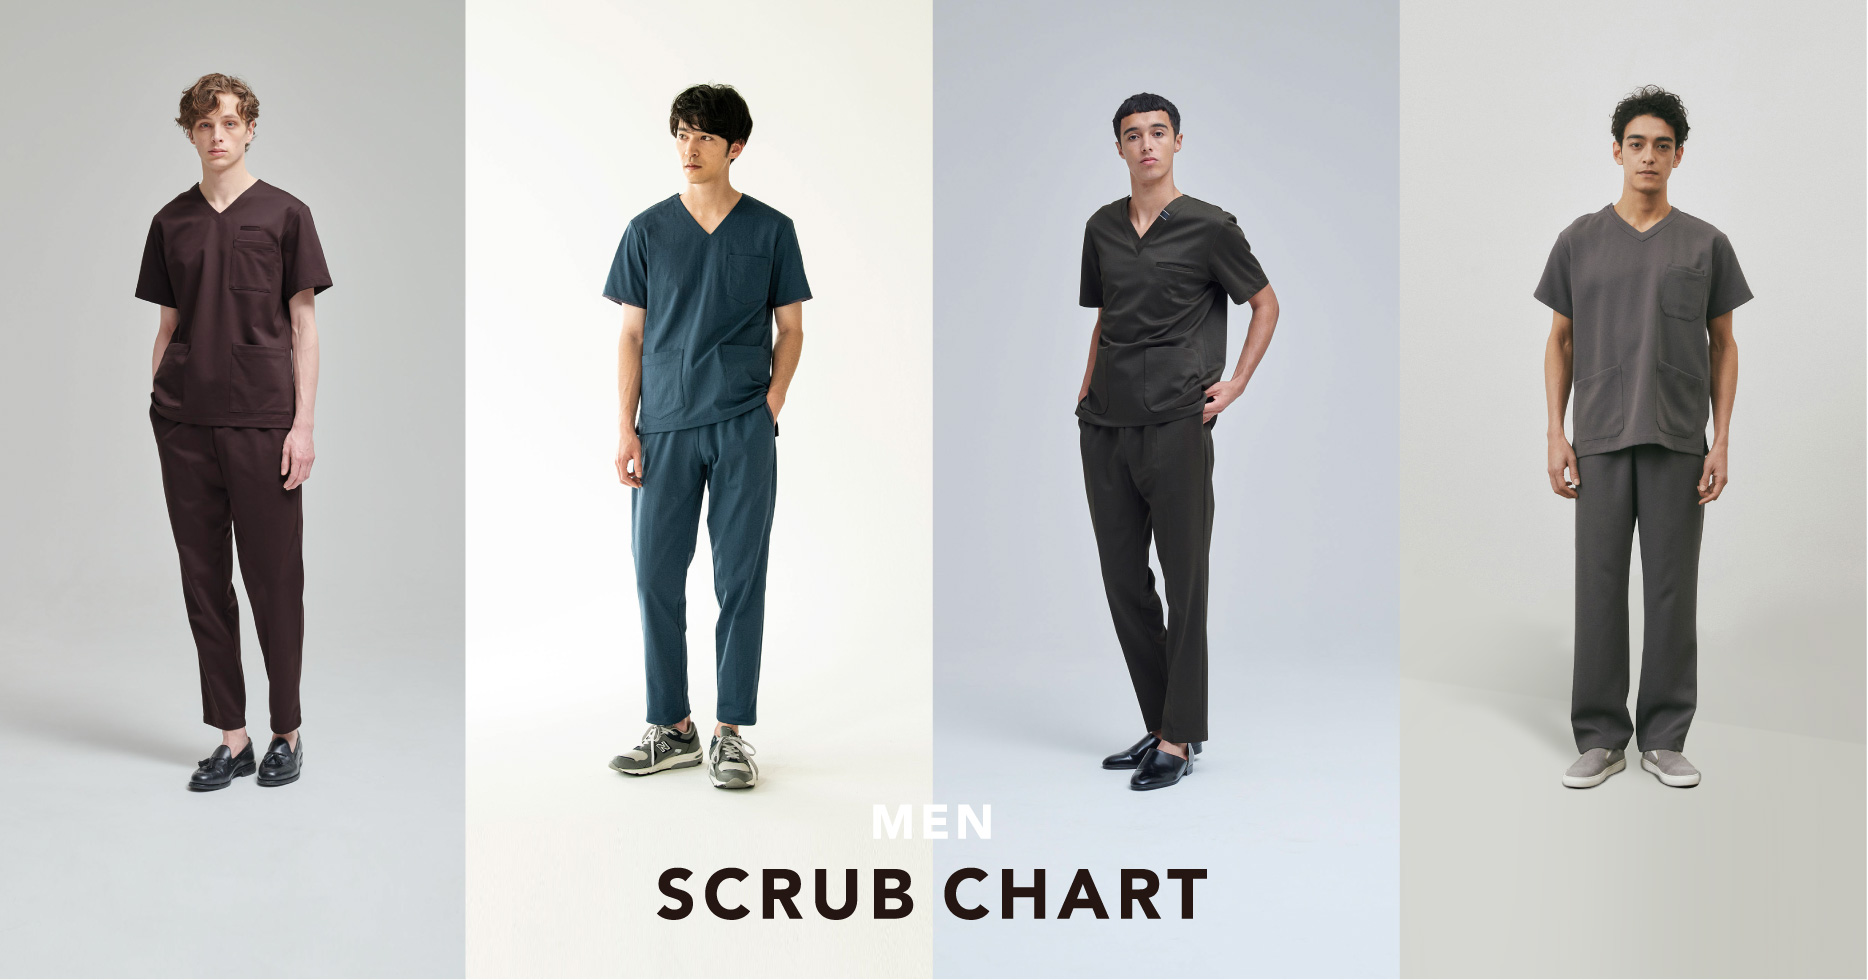 MEN SCRUB CHART